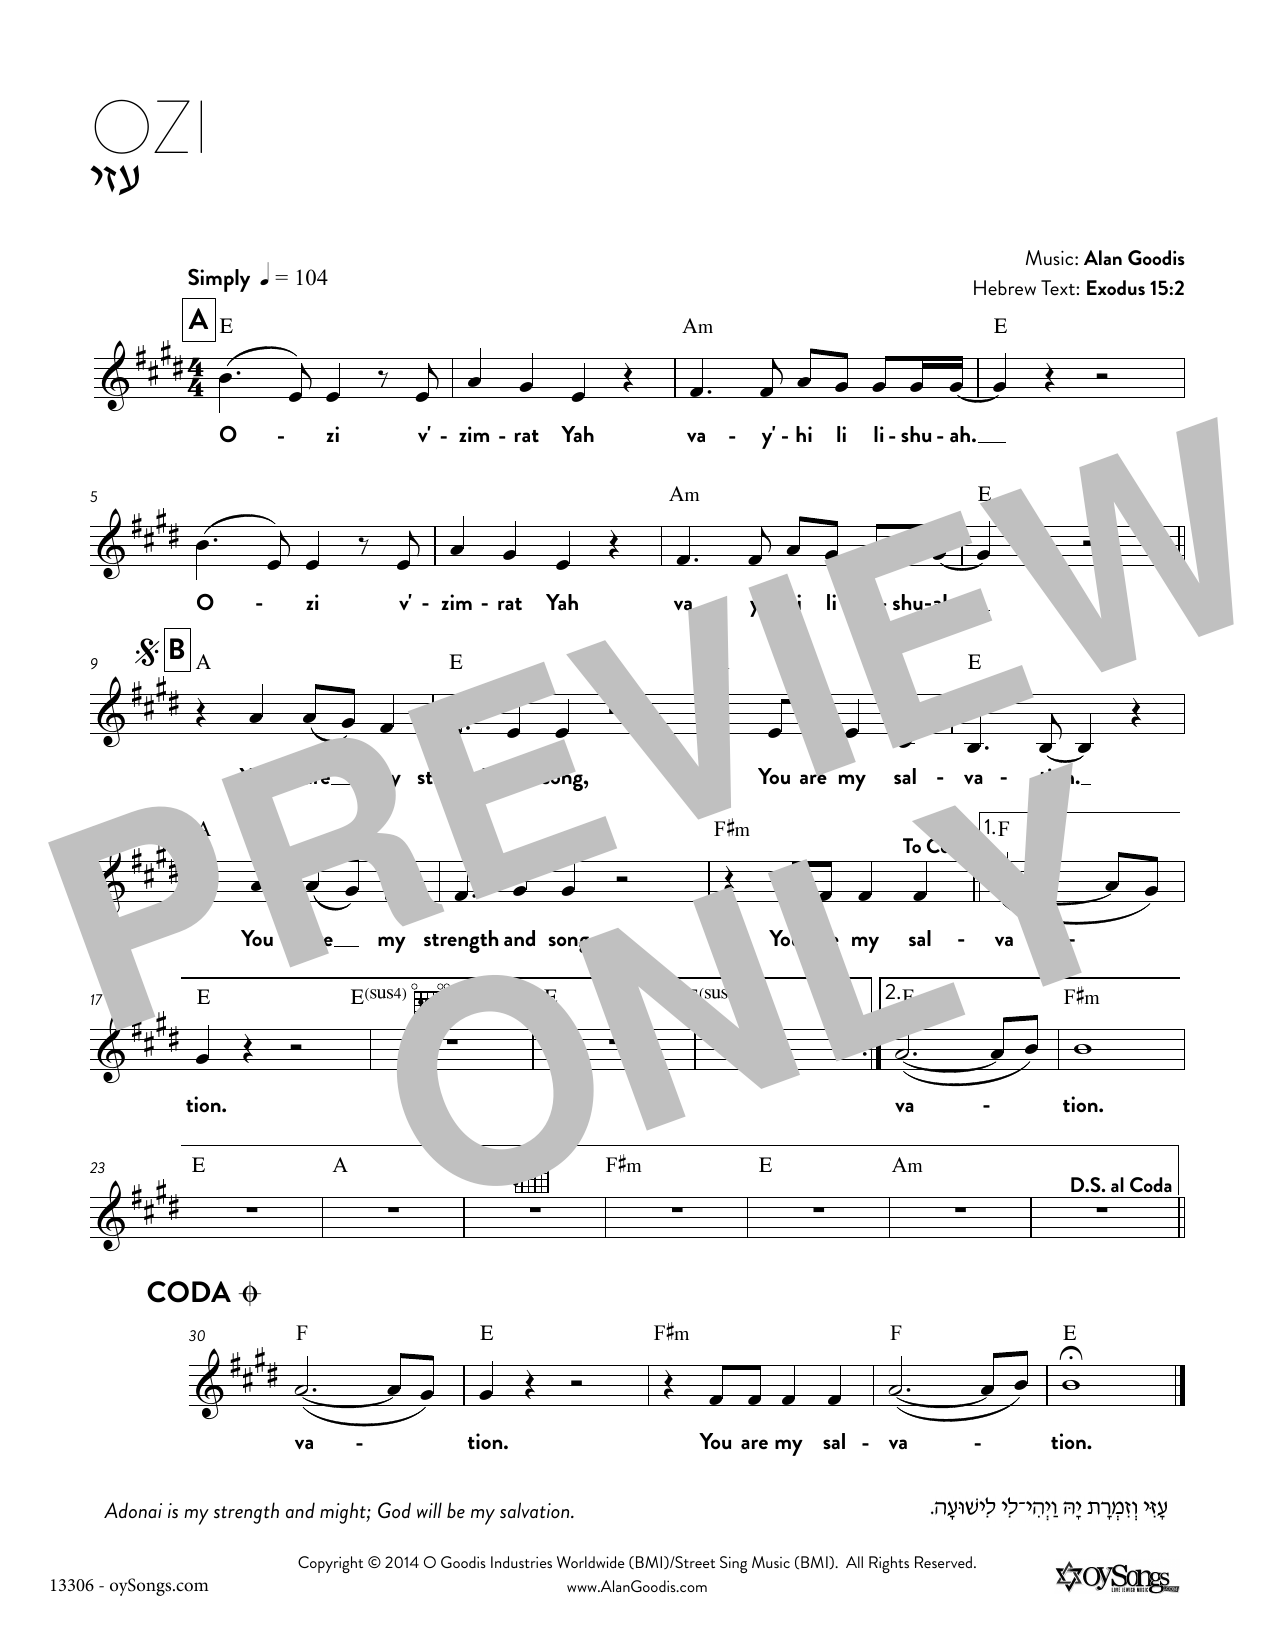 Alan Goodis Ozi Sheet Music Notes & Chords for Real Book – Melody, Lyrics & Chords - Download or Print PDF